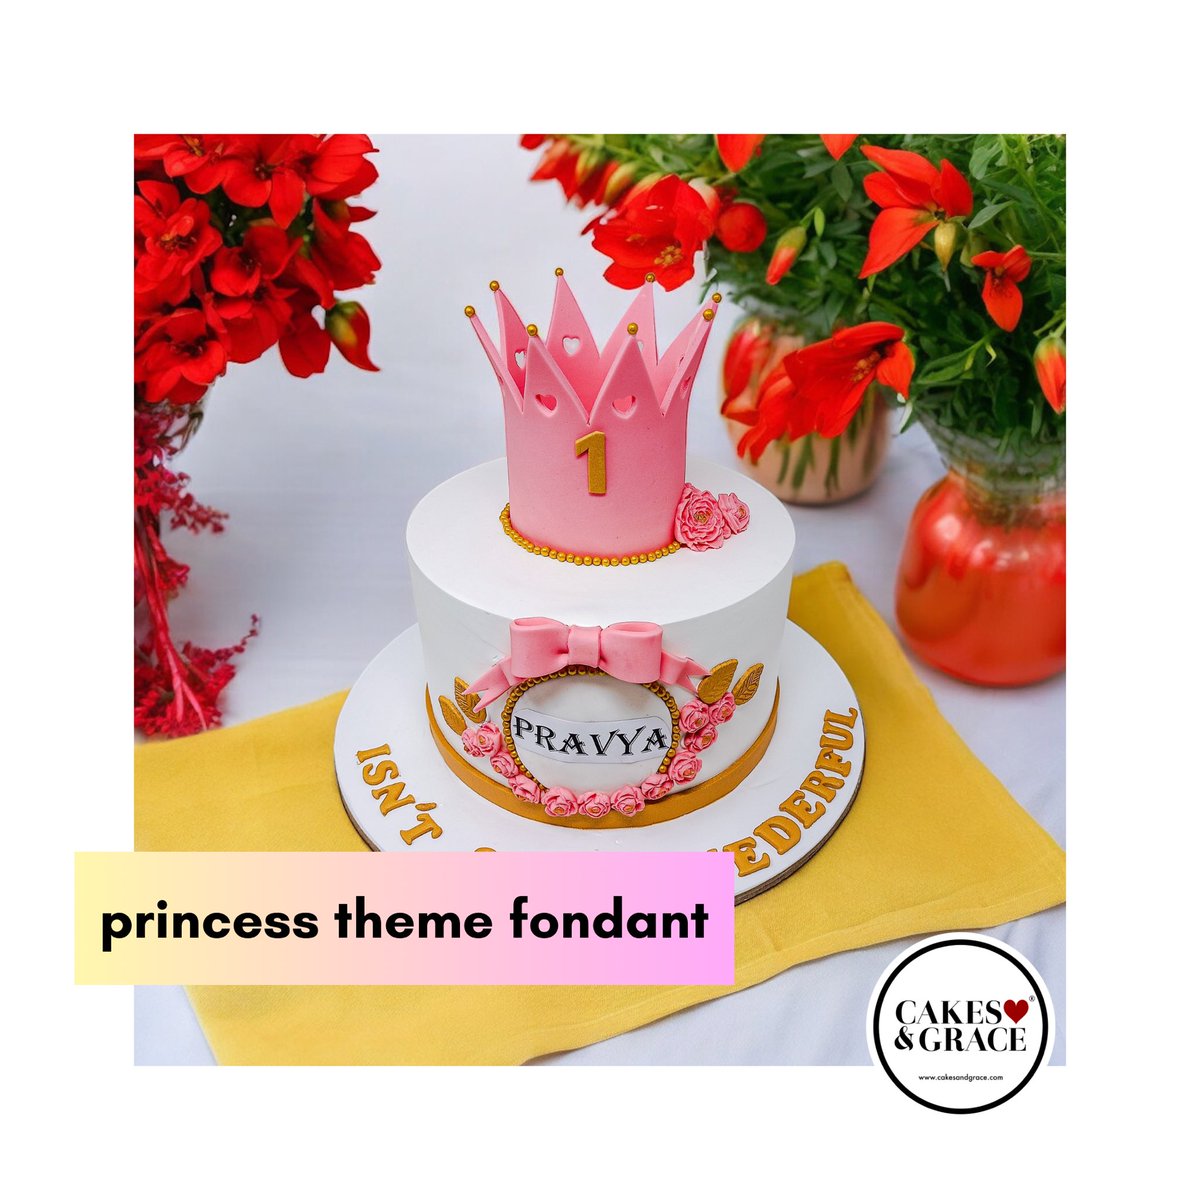 👸🏻🍰
Every princess deserves a slice of enchantment! #royaltreats 
—
Get your imagination designed only at @cakesandgracein
—
☎️: +91 9040 506 506
🛍: cakesandgrace.com
—
#spreadlove #cakesandgrace
#princesscake #princess #customcakes #designercakes #cakeoftheday